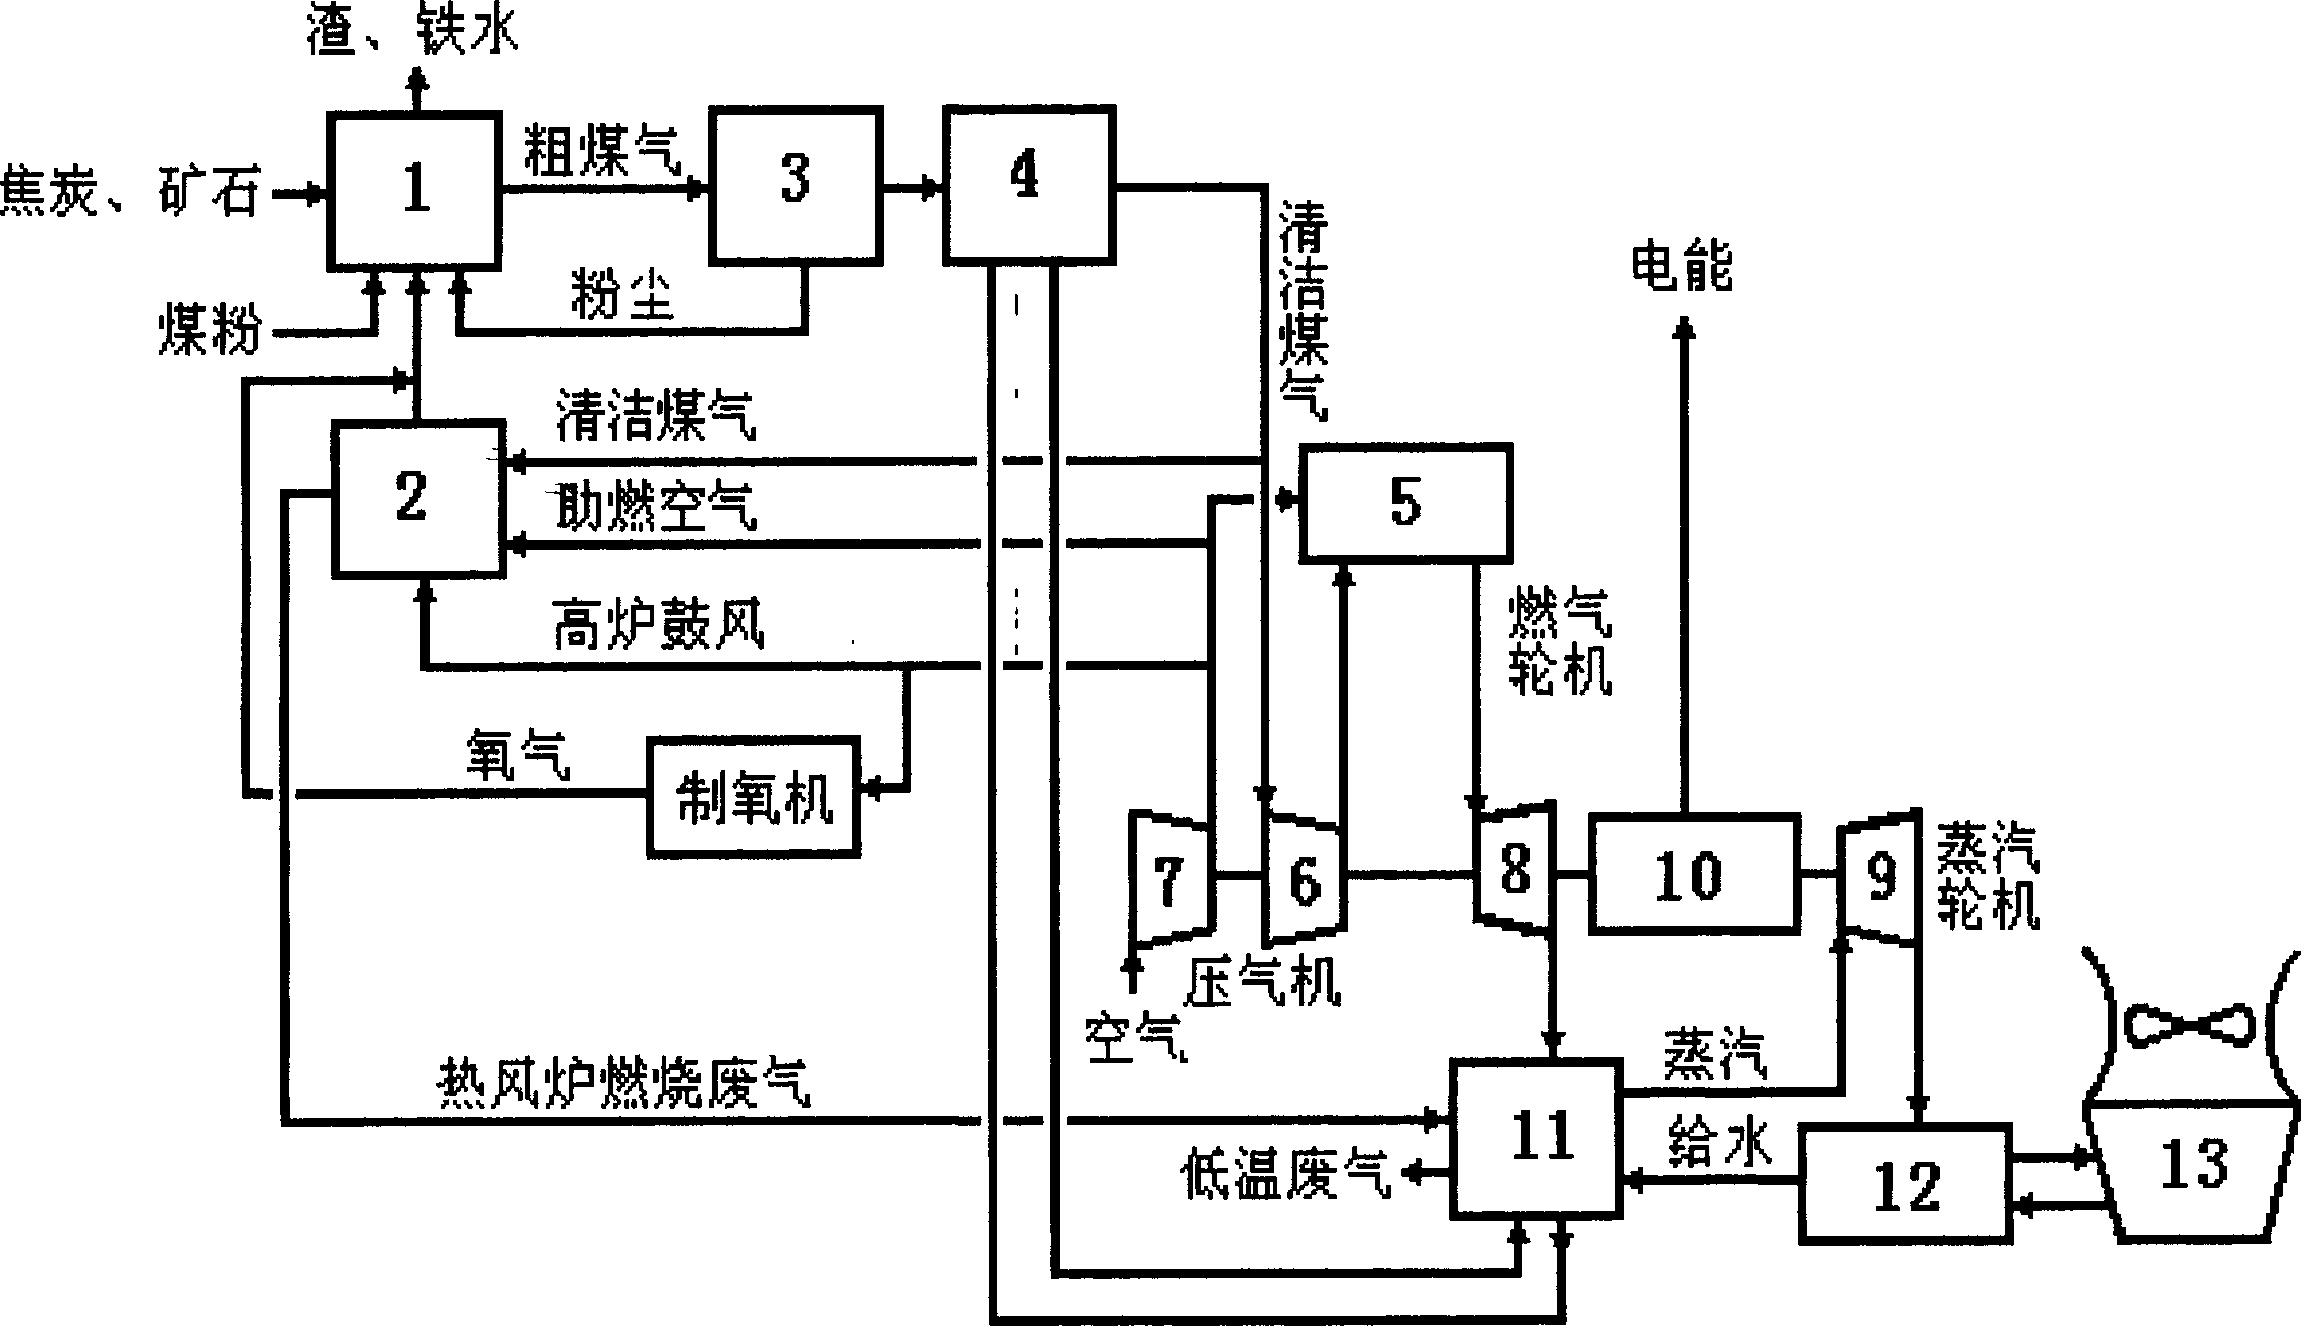 Integral blast furnace combined circulation method